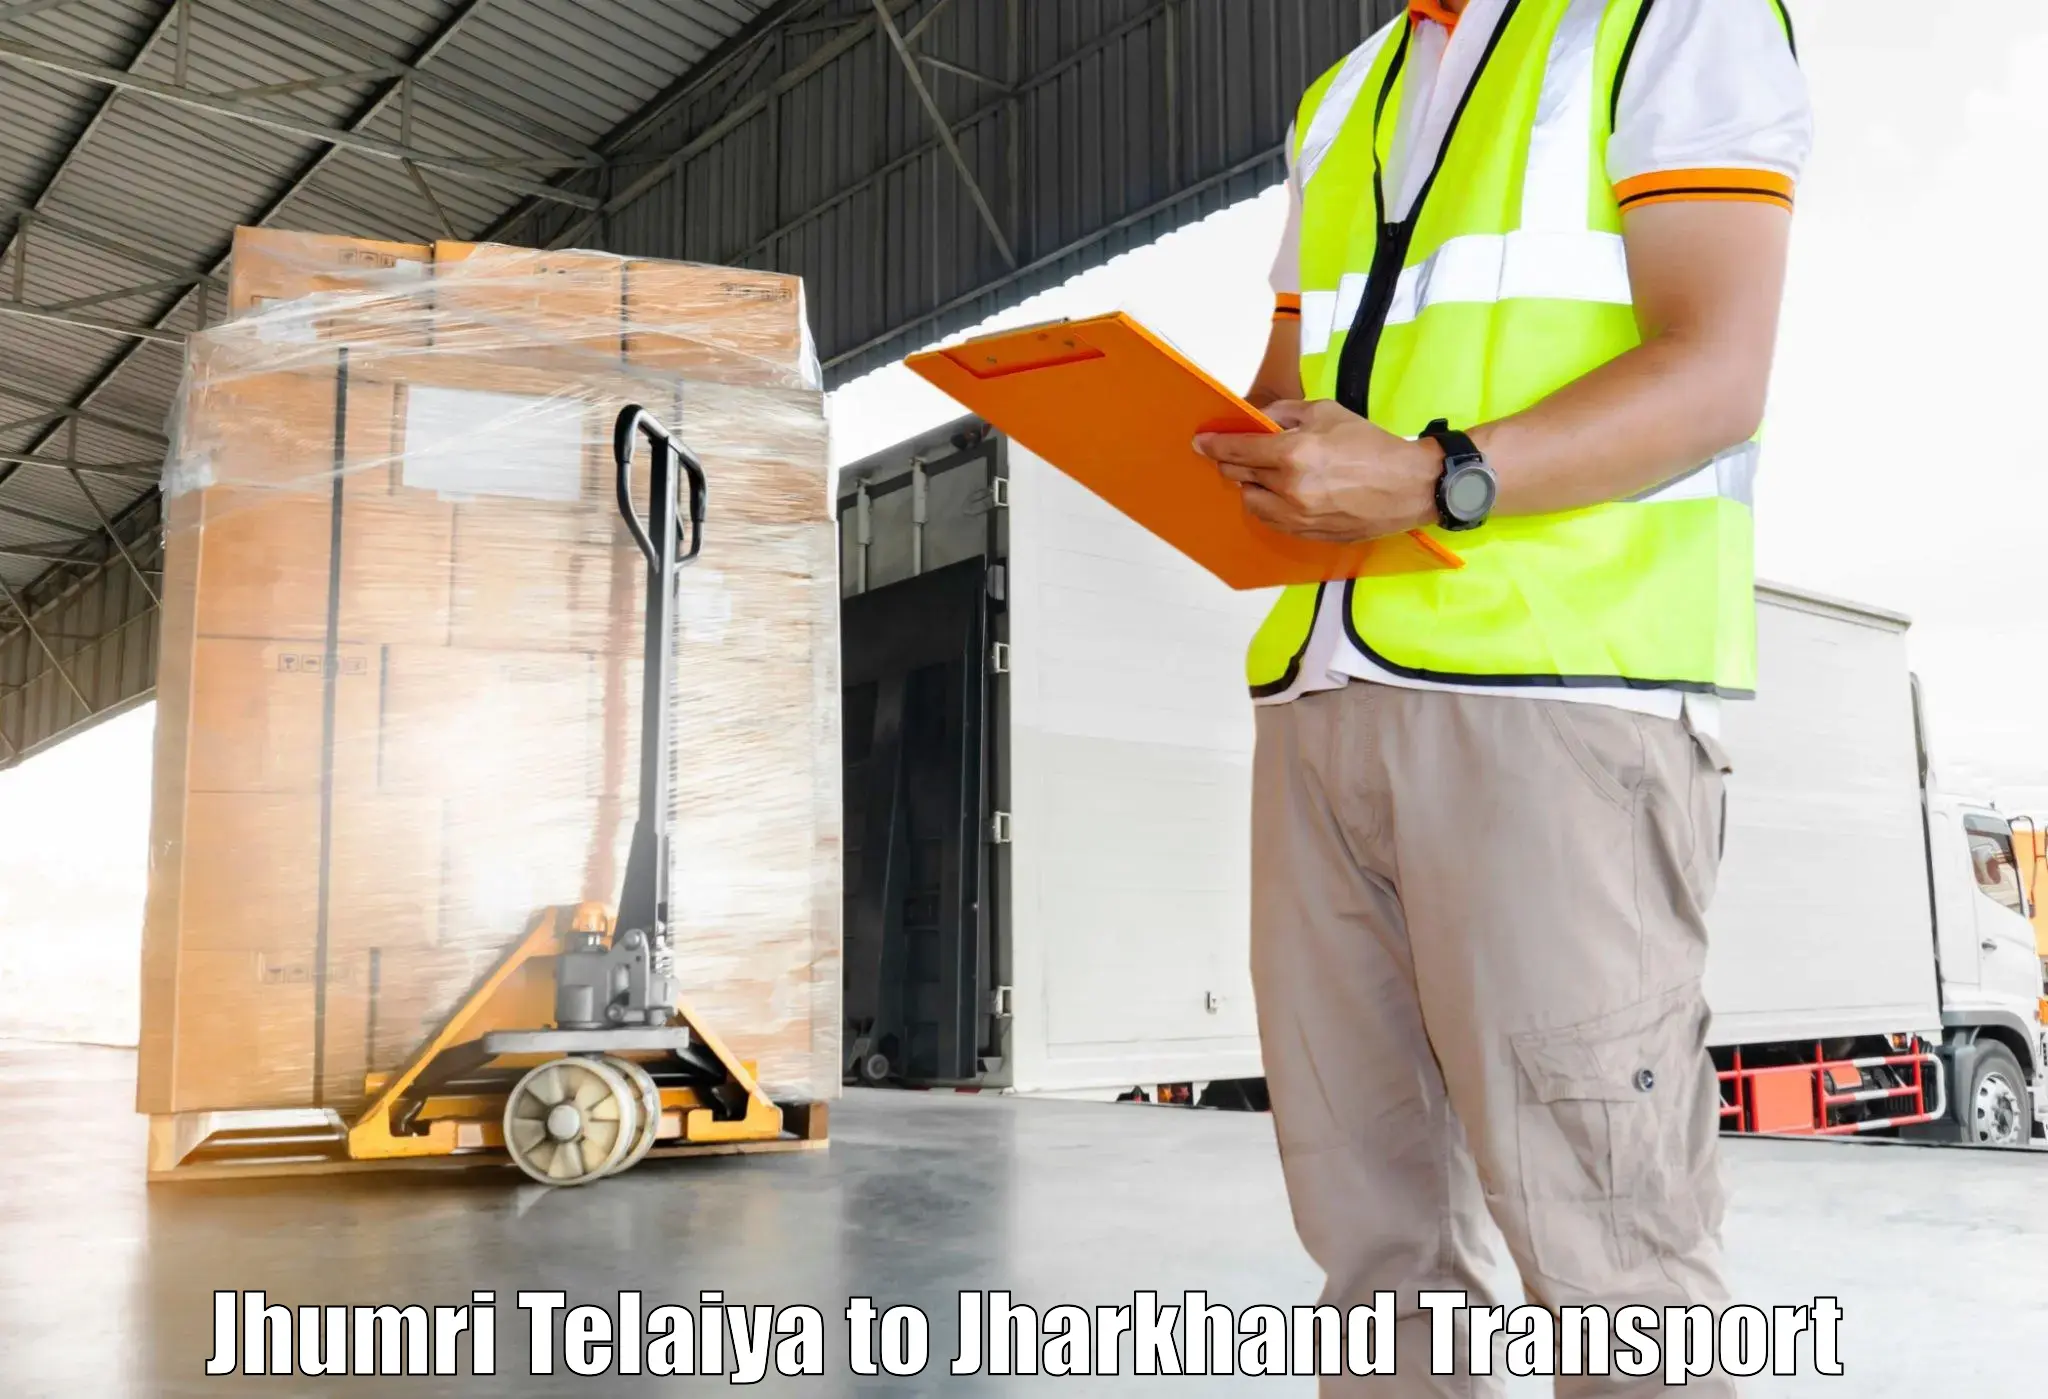 Furniture transport service Jhumri Telaiya to Jharkhand